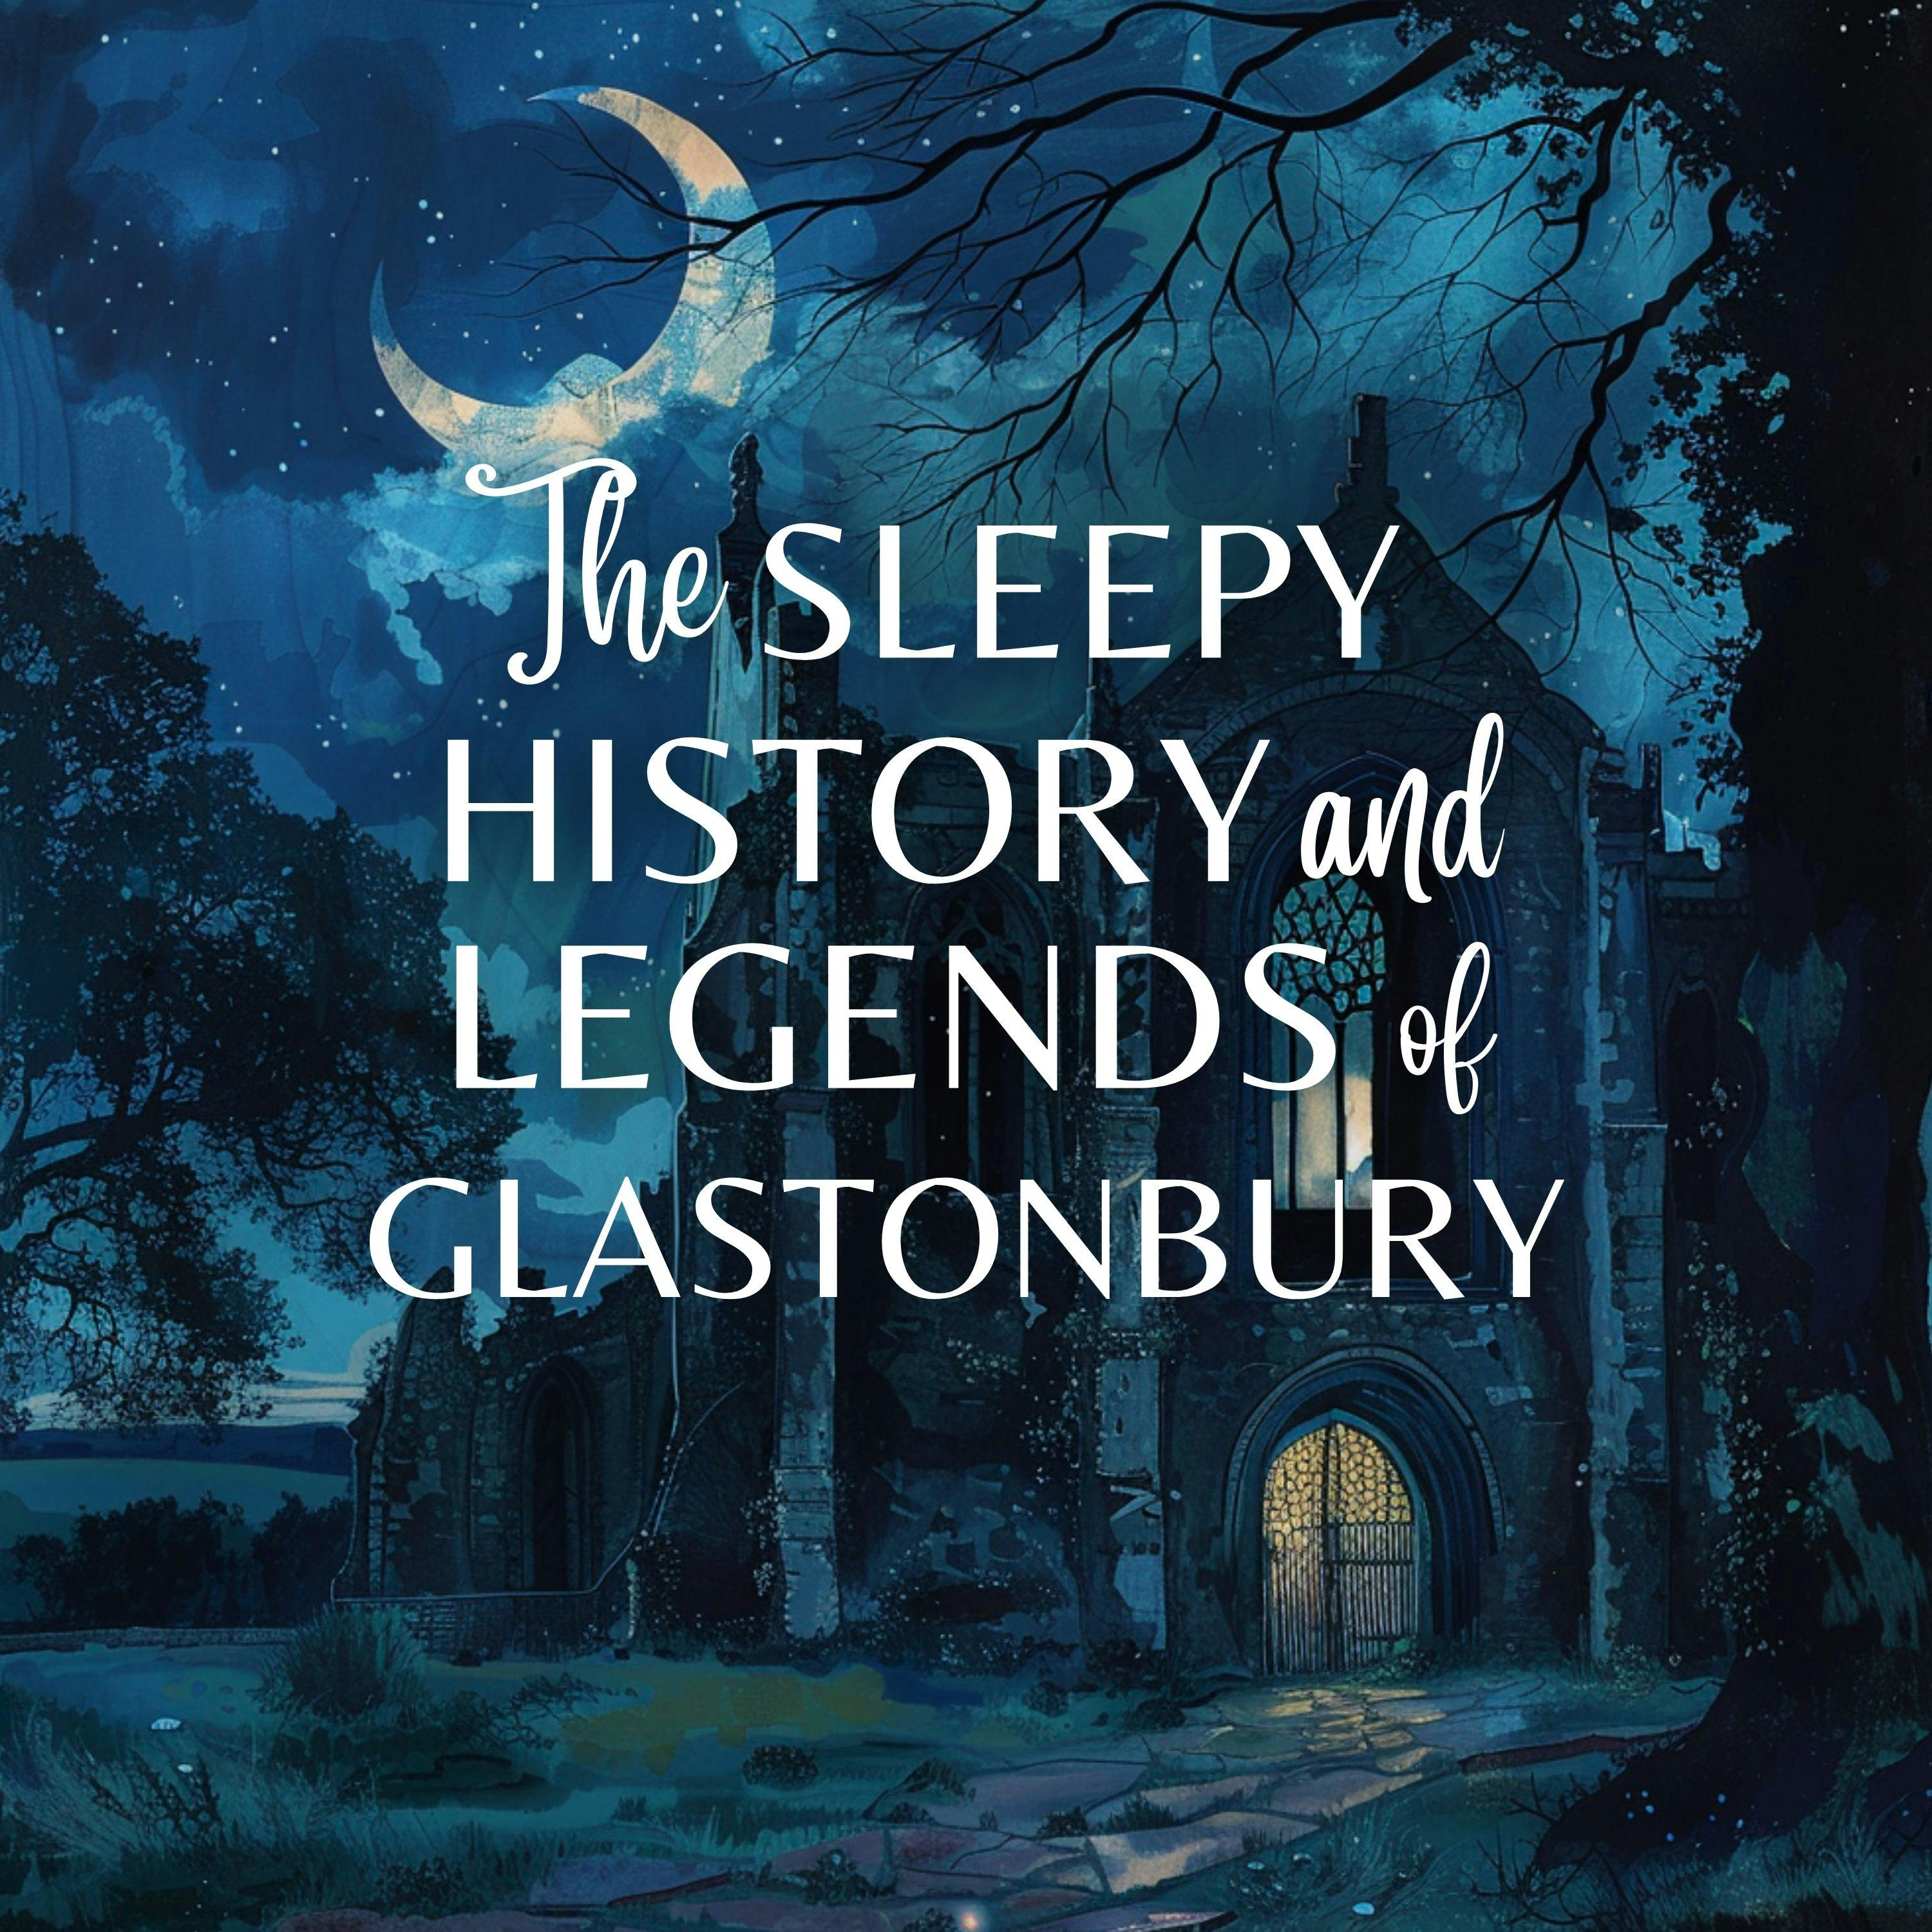 The Sleepy History and Legends of Glastonbury